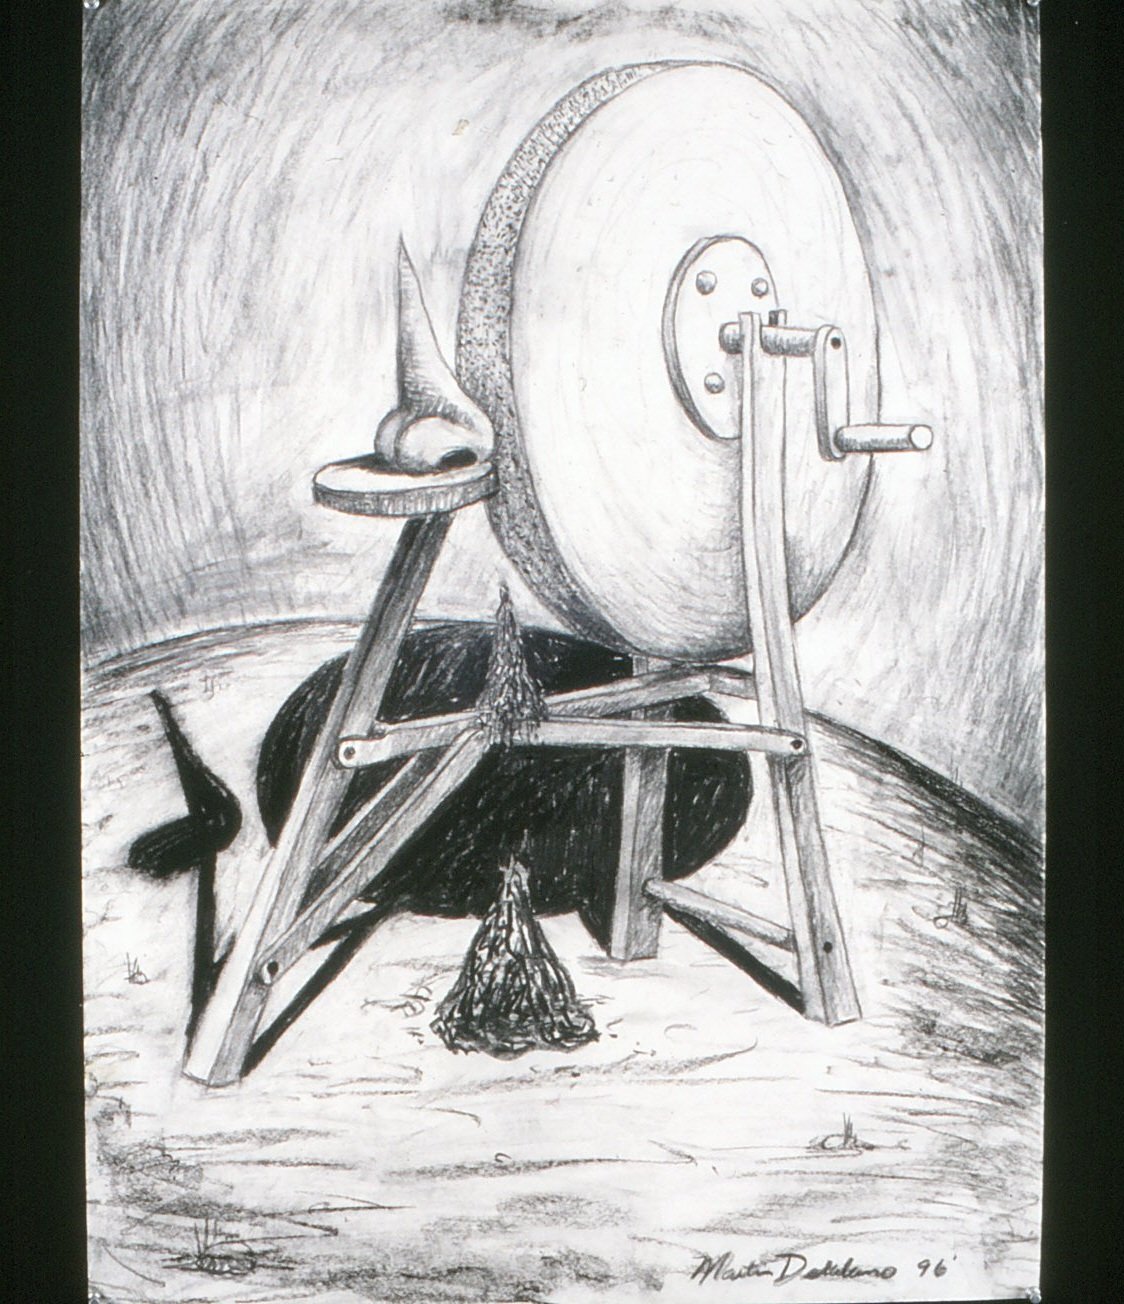 Toil's wheel, 1996